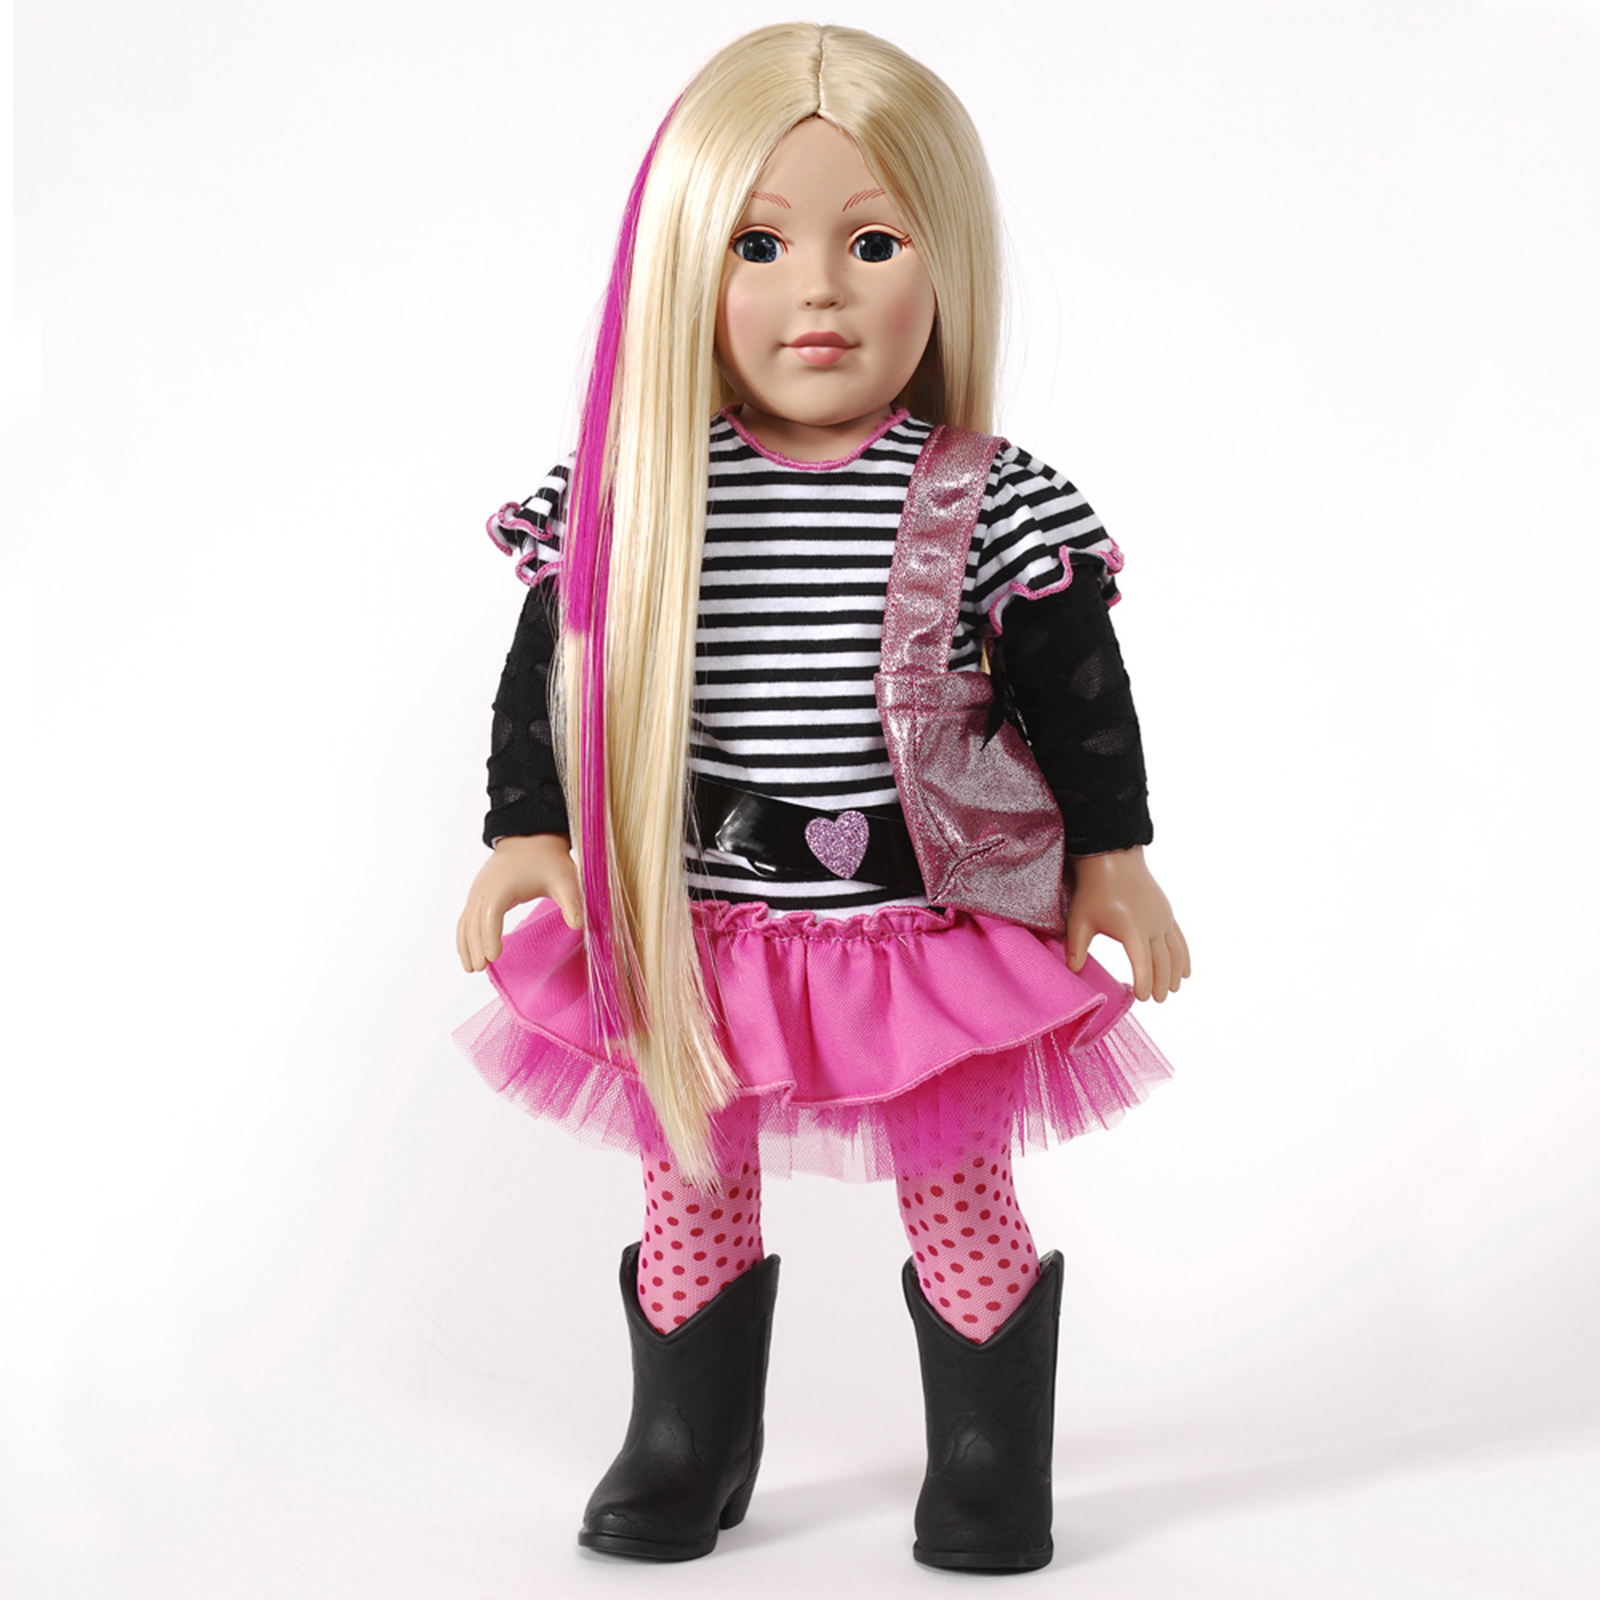 18" Blue-eyed Blonde Doll - Kmart Exclusive